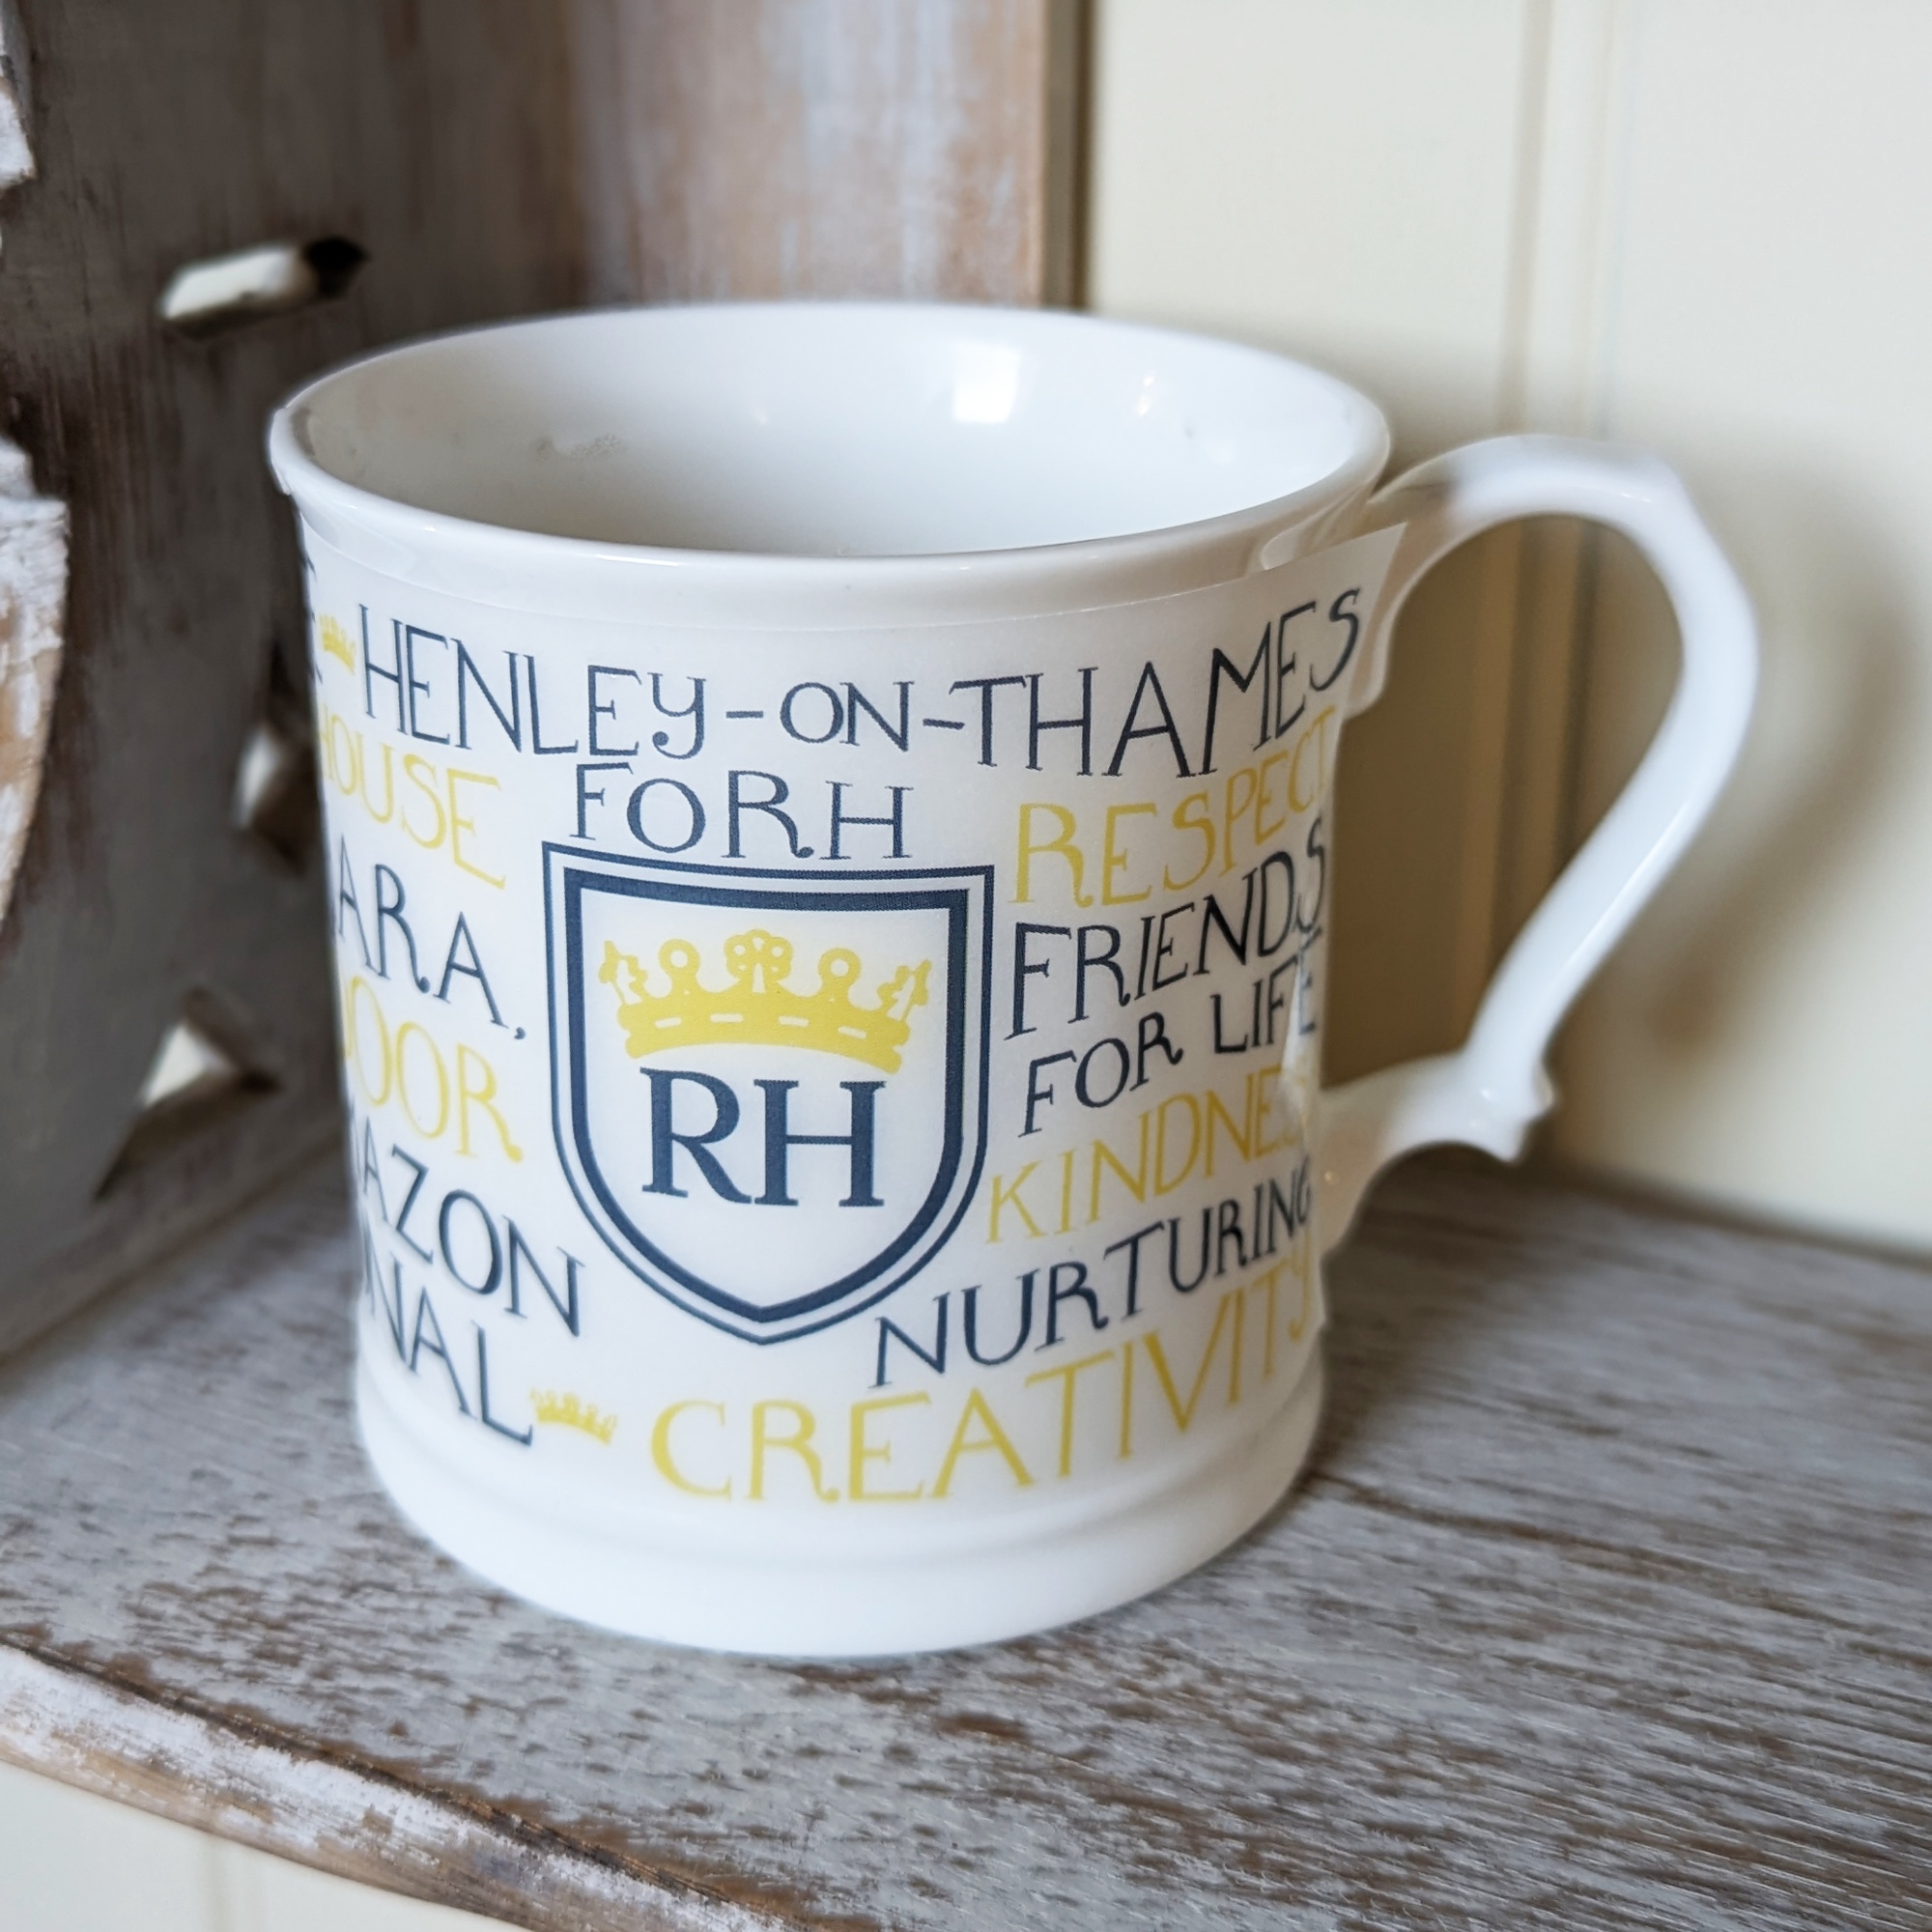 RHS mugs